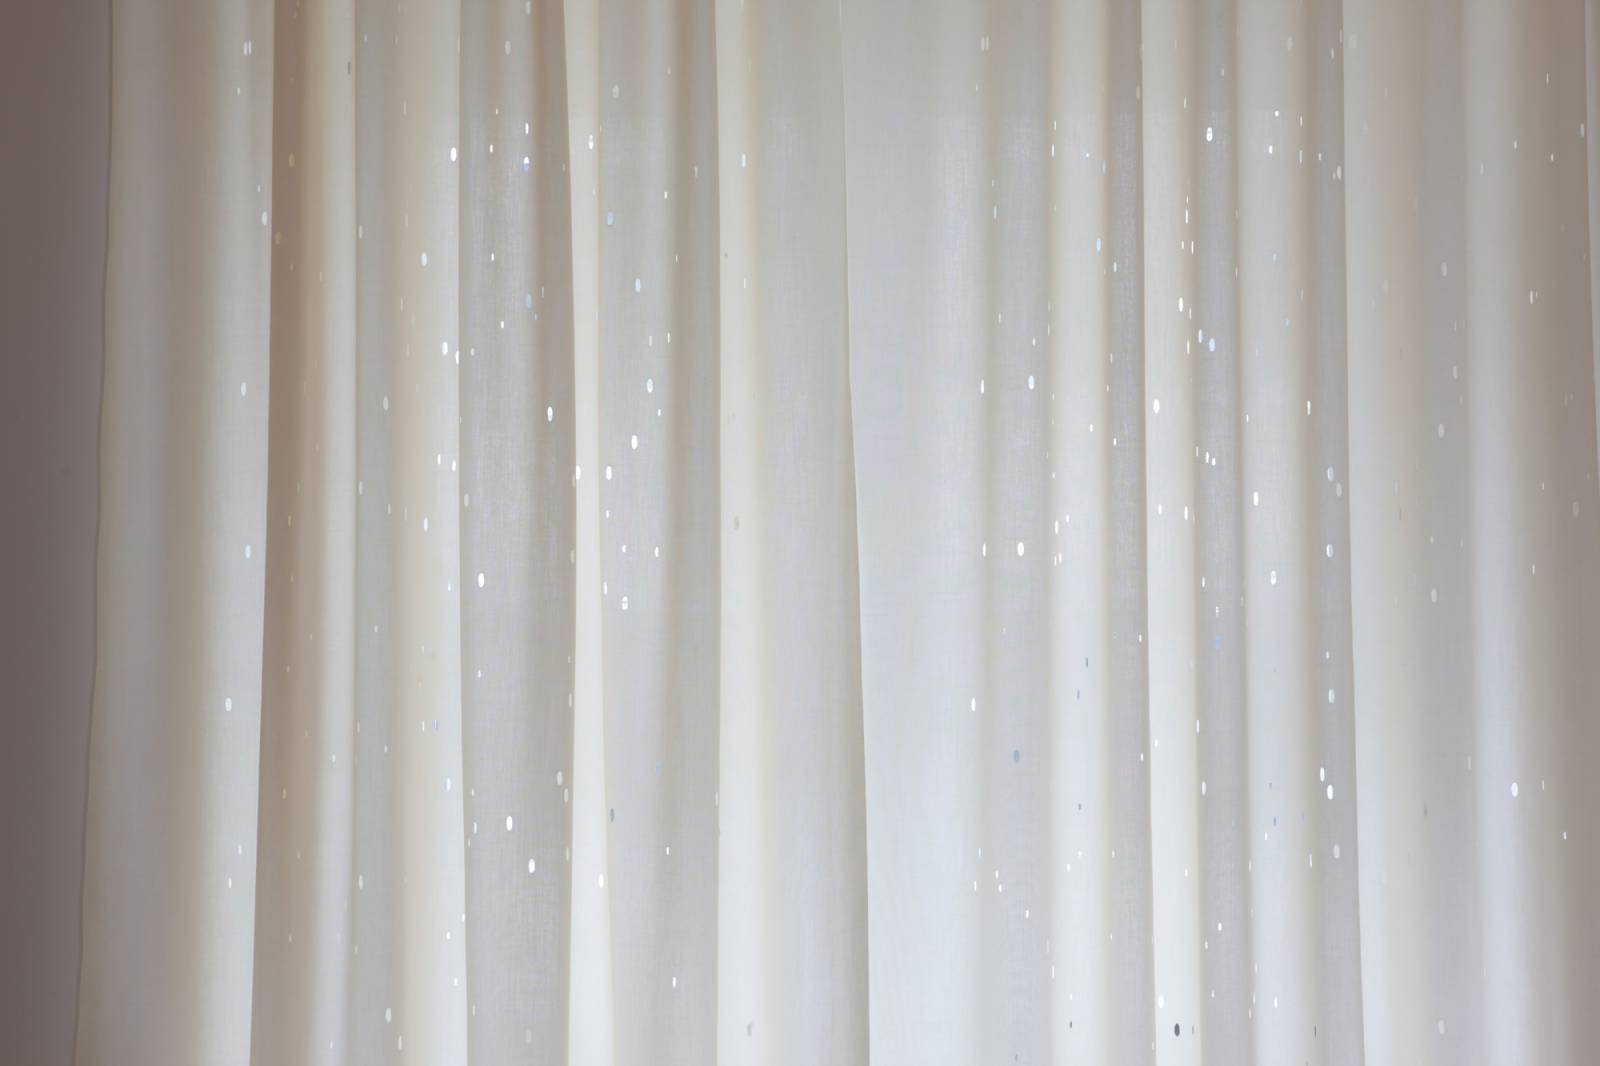 Wave curtains: hot sombat